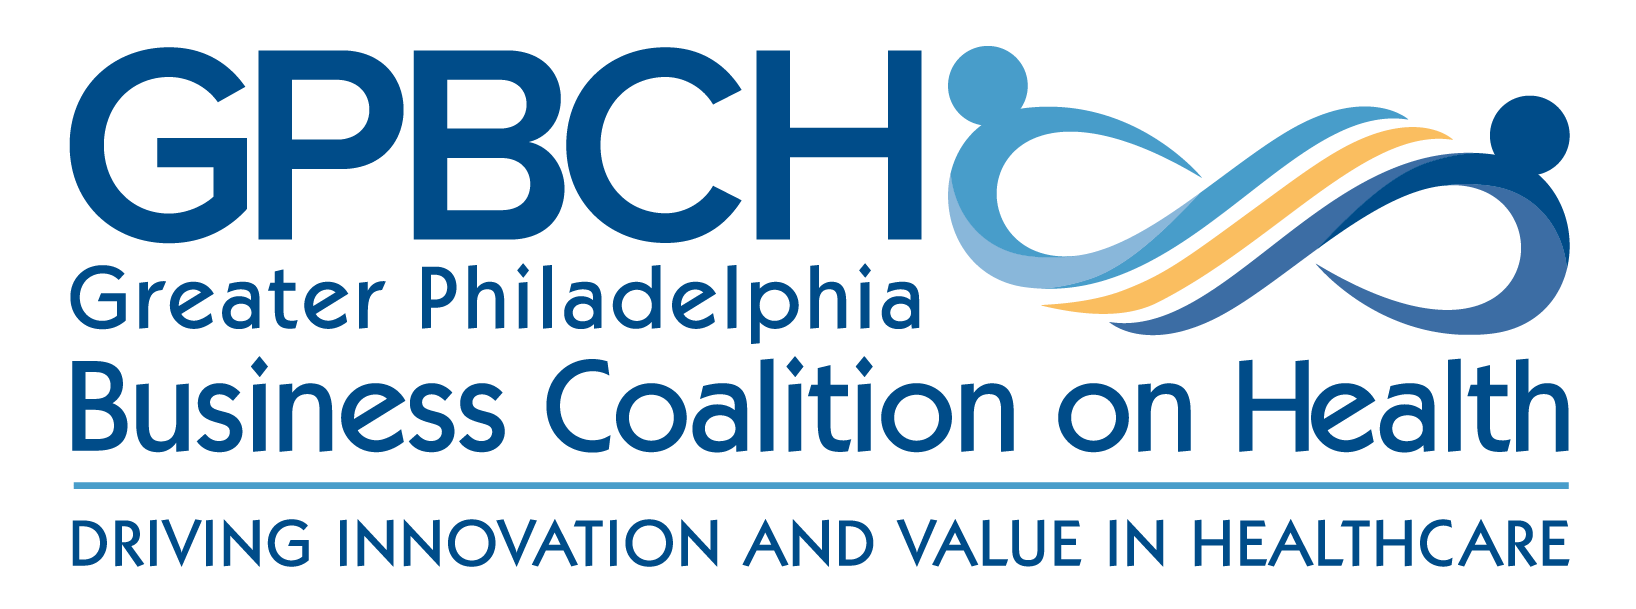 Greater Philadelphia Business Coalition on Health logo